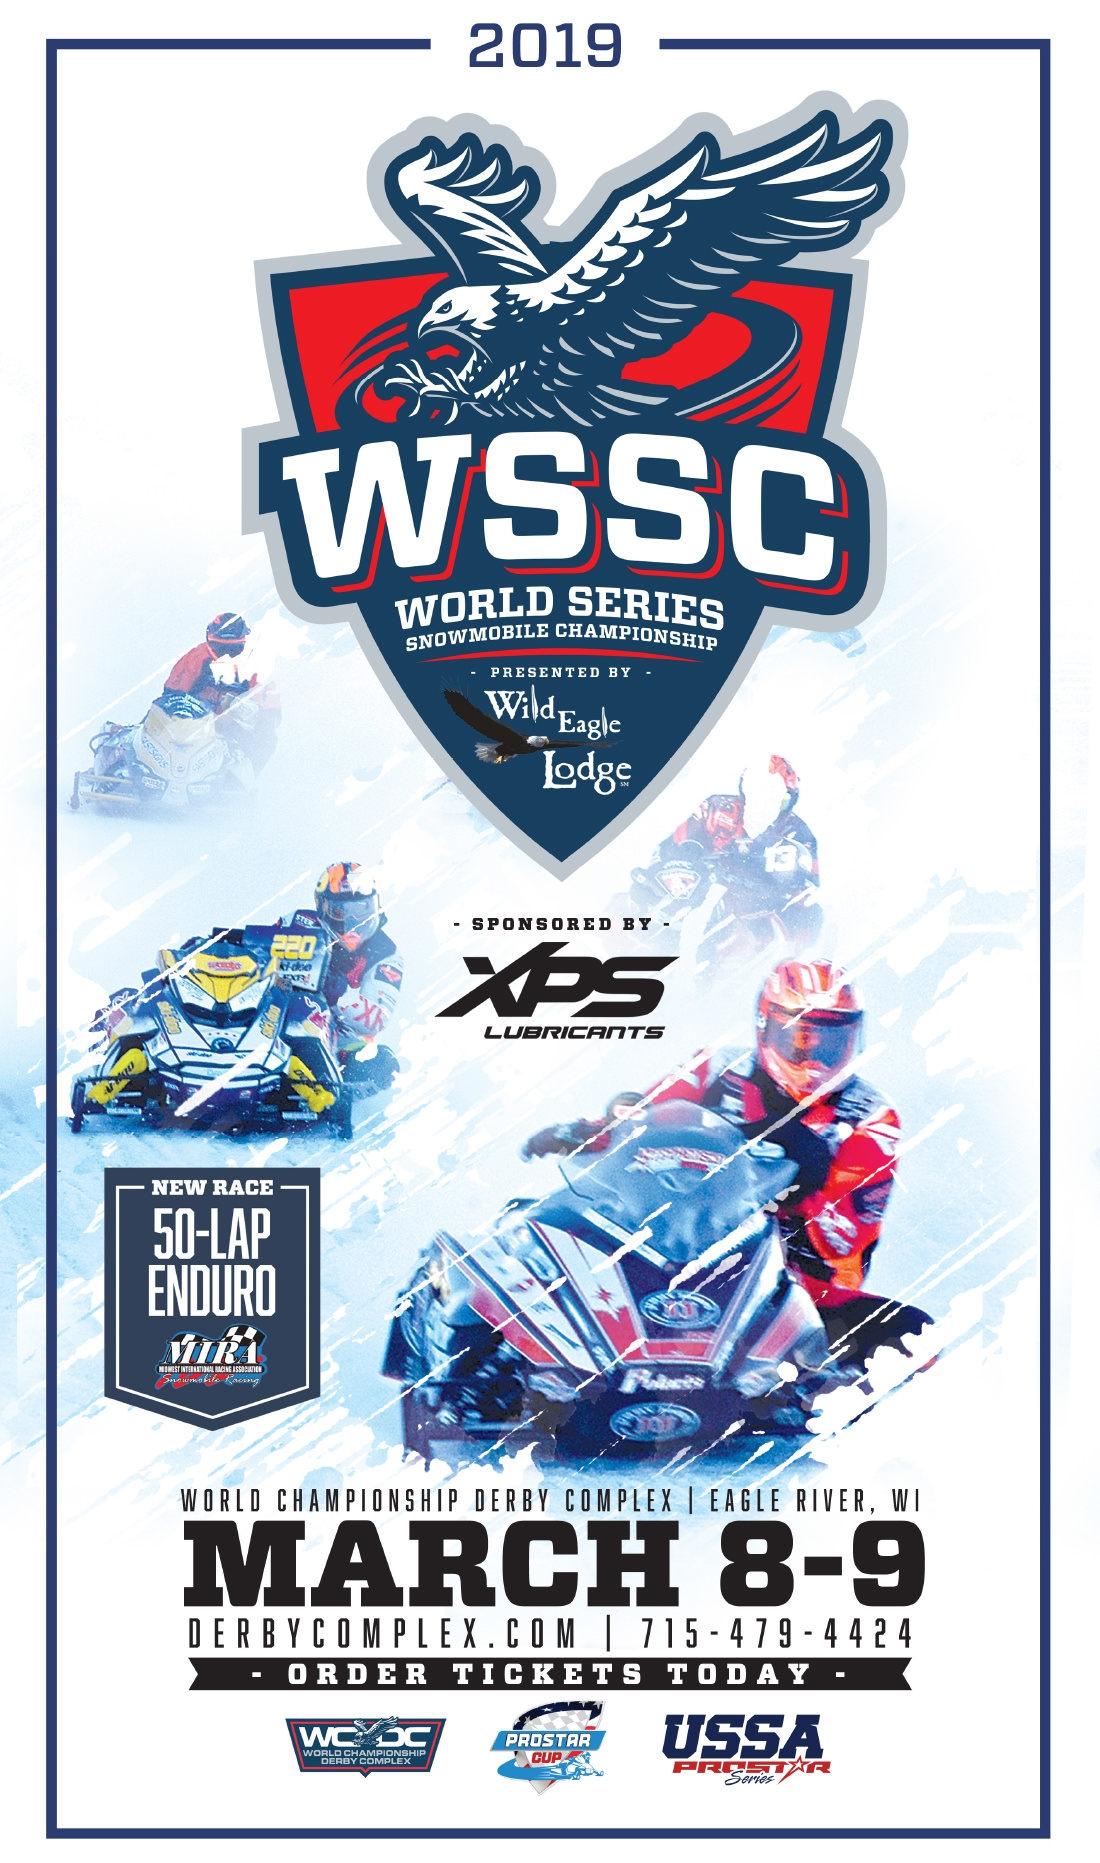 World Series Snowmobile Championship